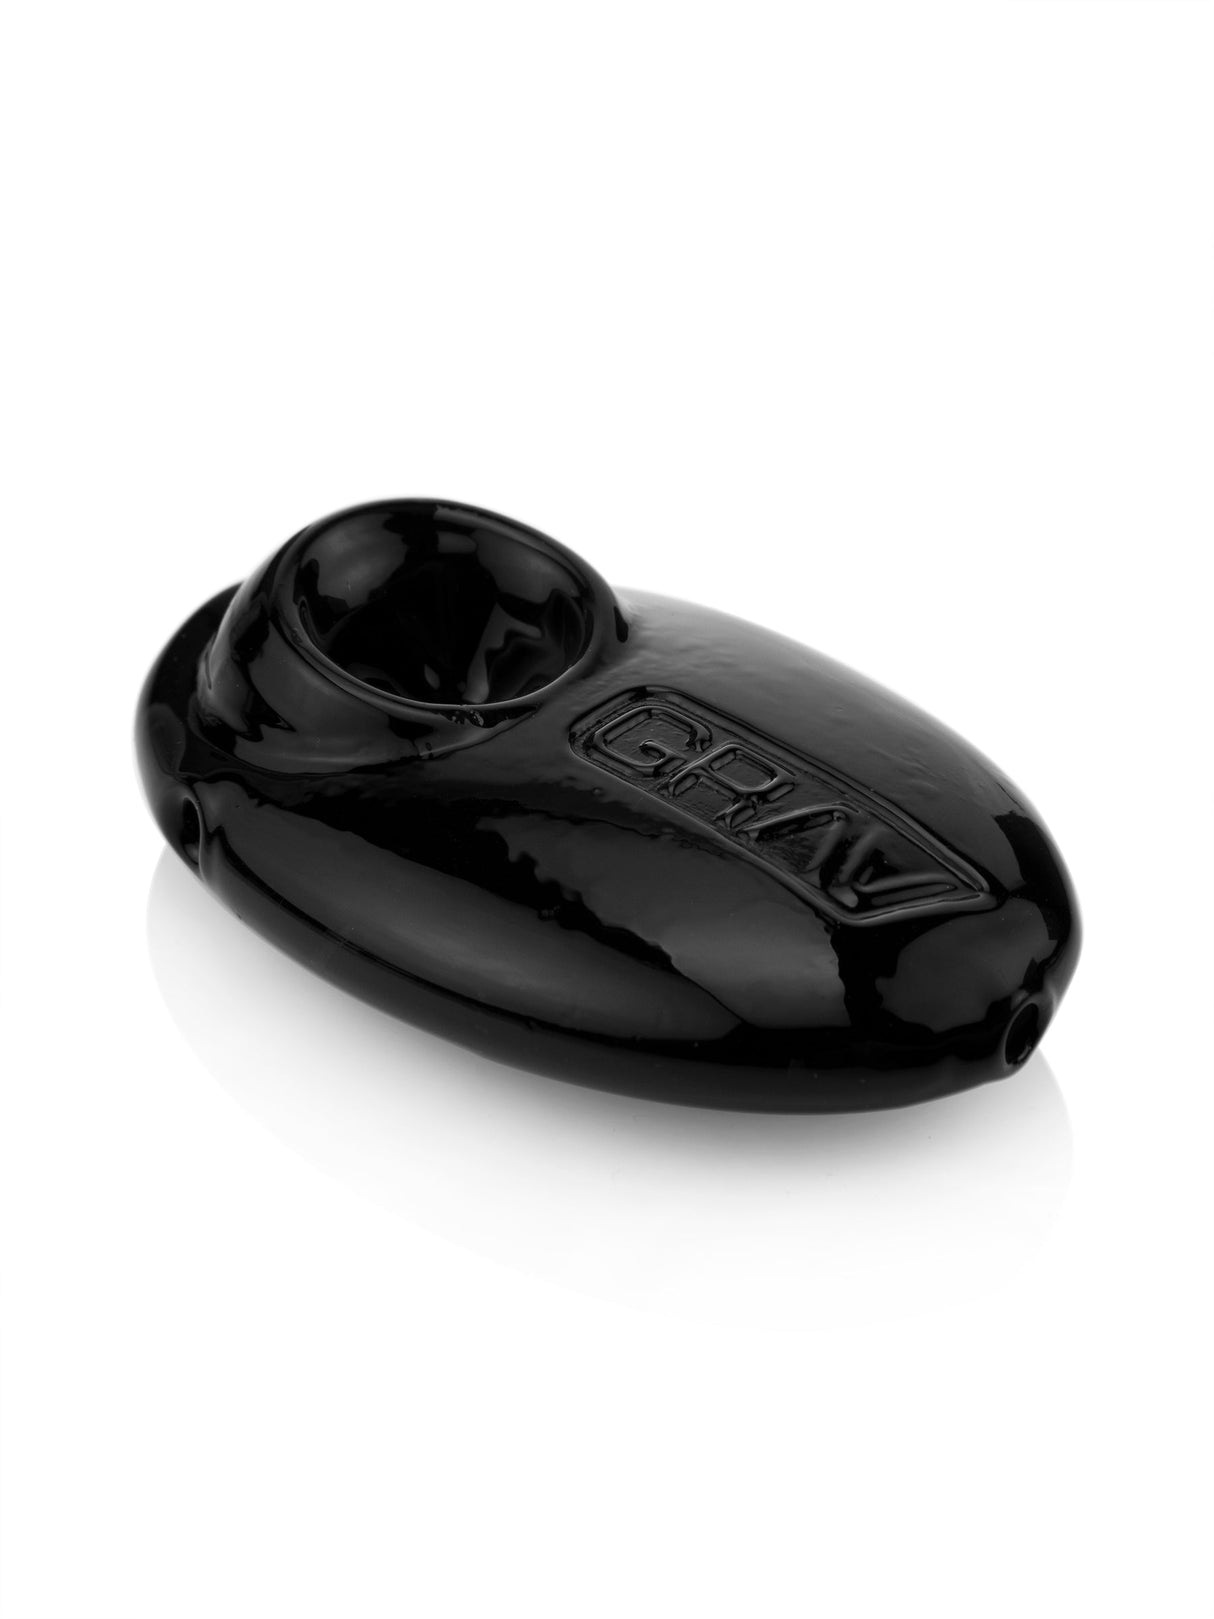 GRAV Pebble Spoon Hand Pipe in Black - Compact Borosilicate Glass - Top View